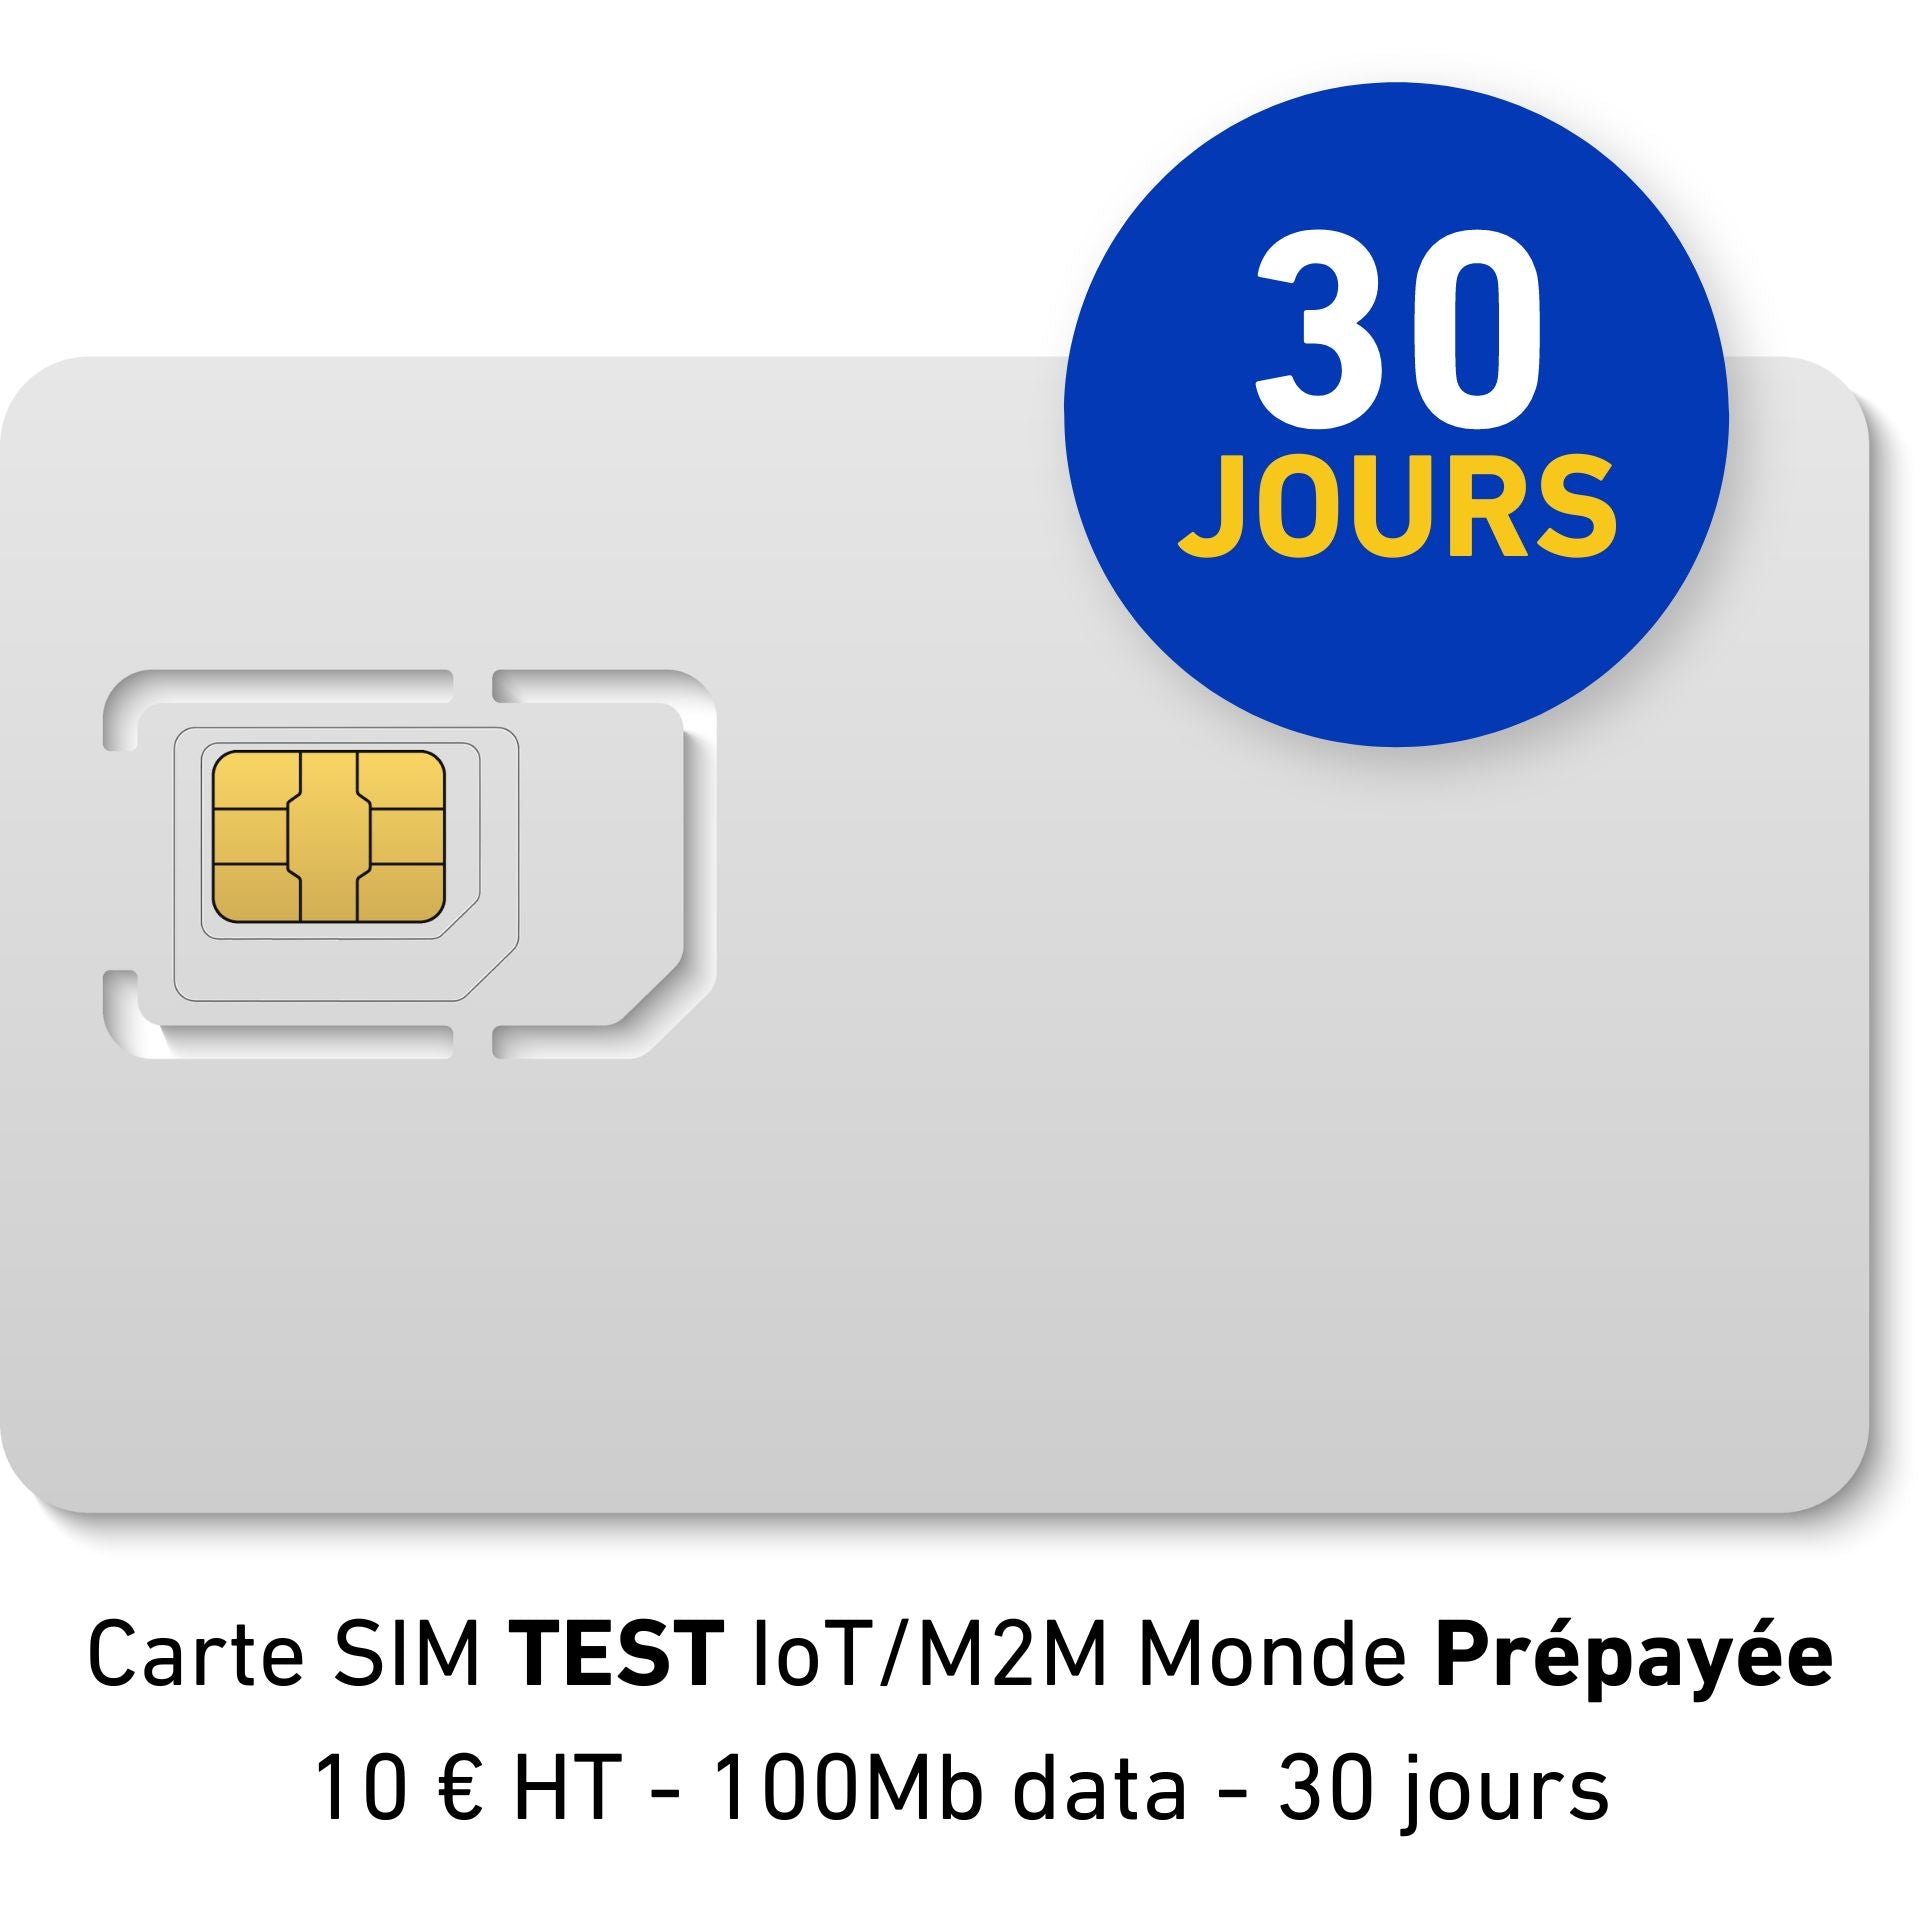 IoT/M2M World Prepaid TEST SIM Card - 10 € HT - 100Mb di dati - 30 giorni